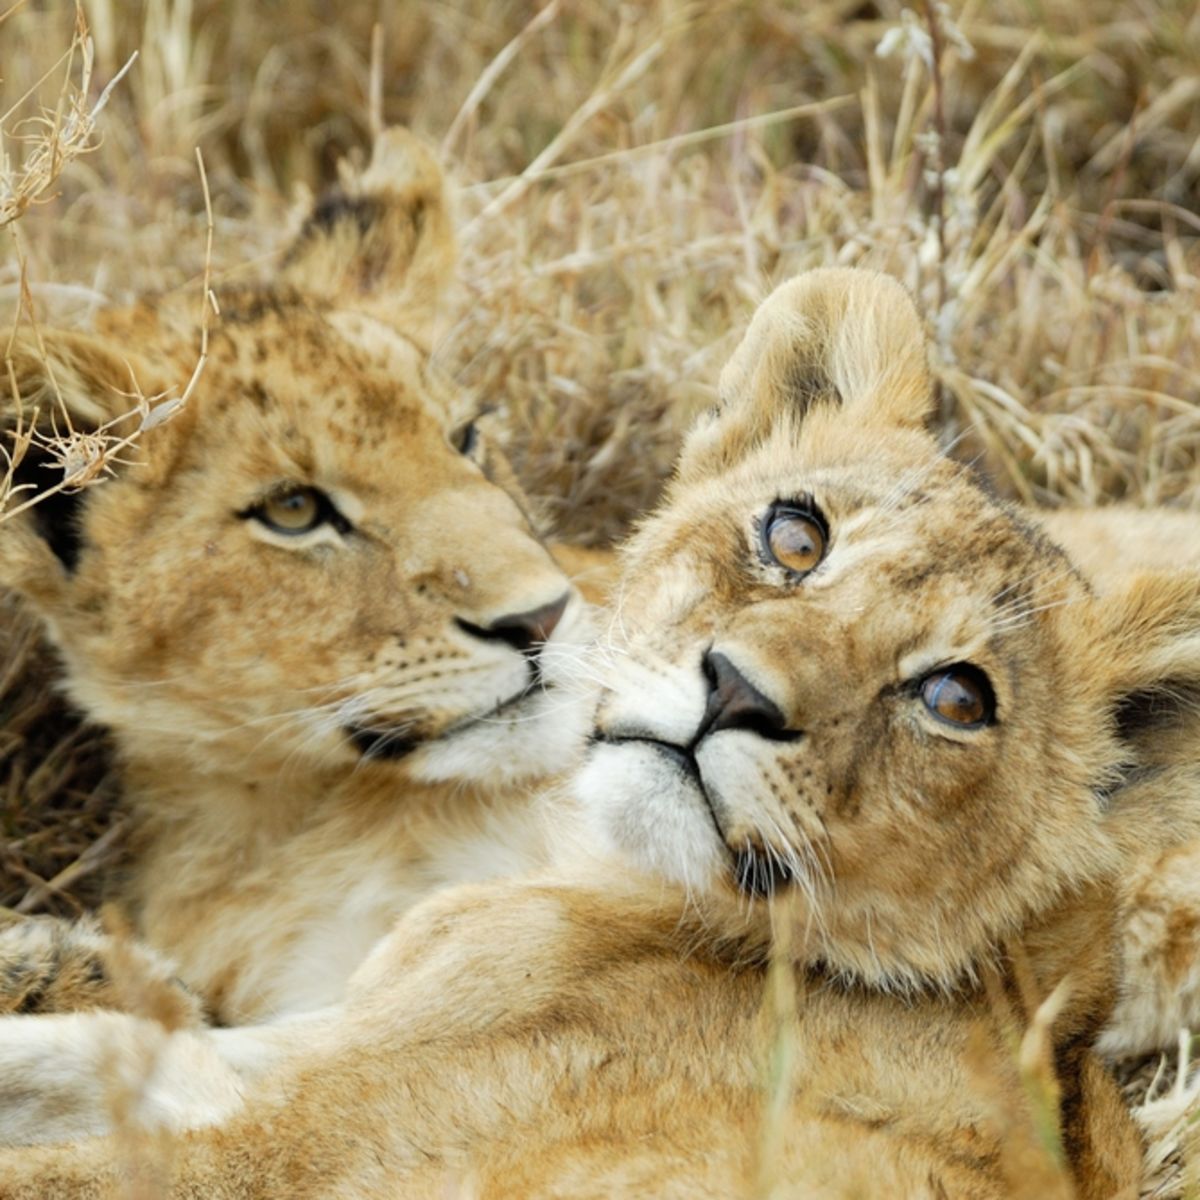 Lion cubs in the savannah, Serengeti National Park, Tanzania